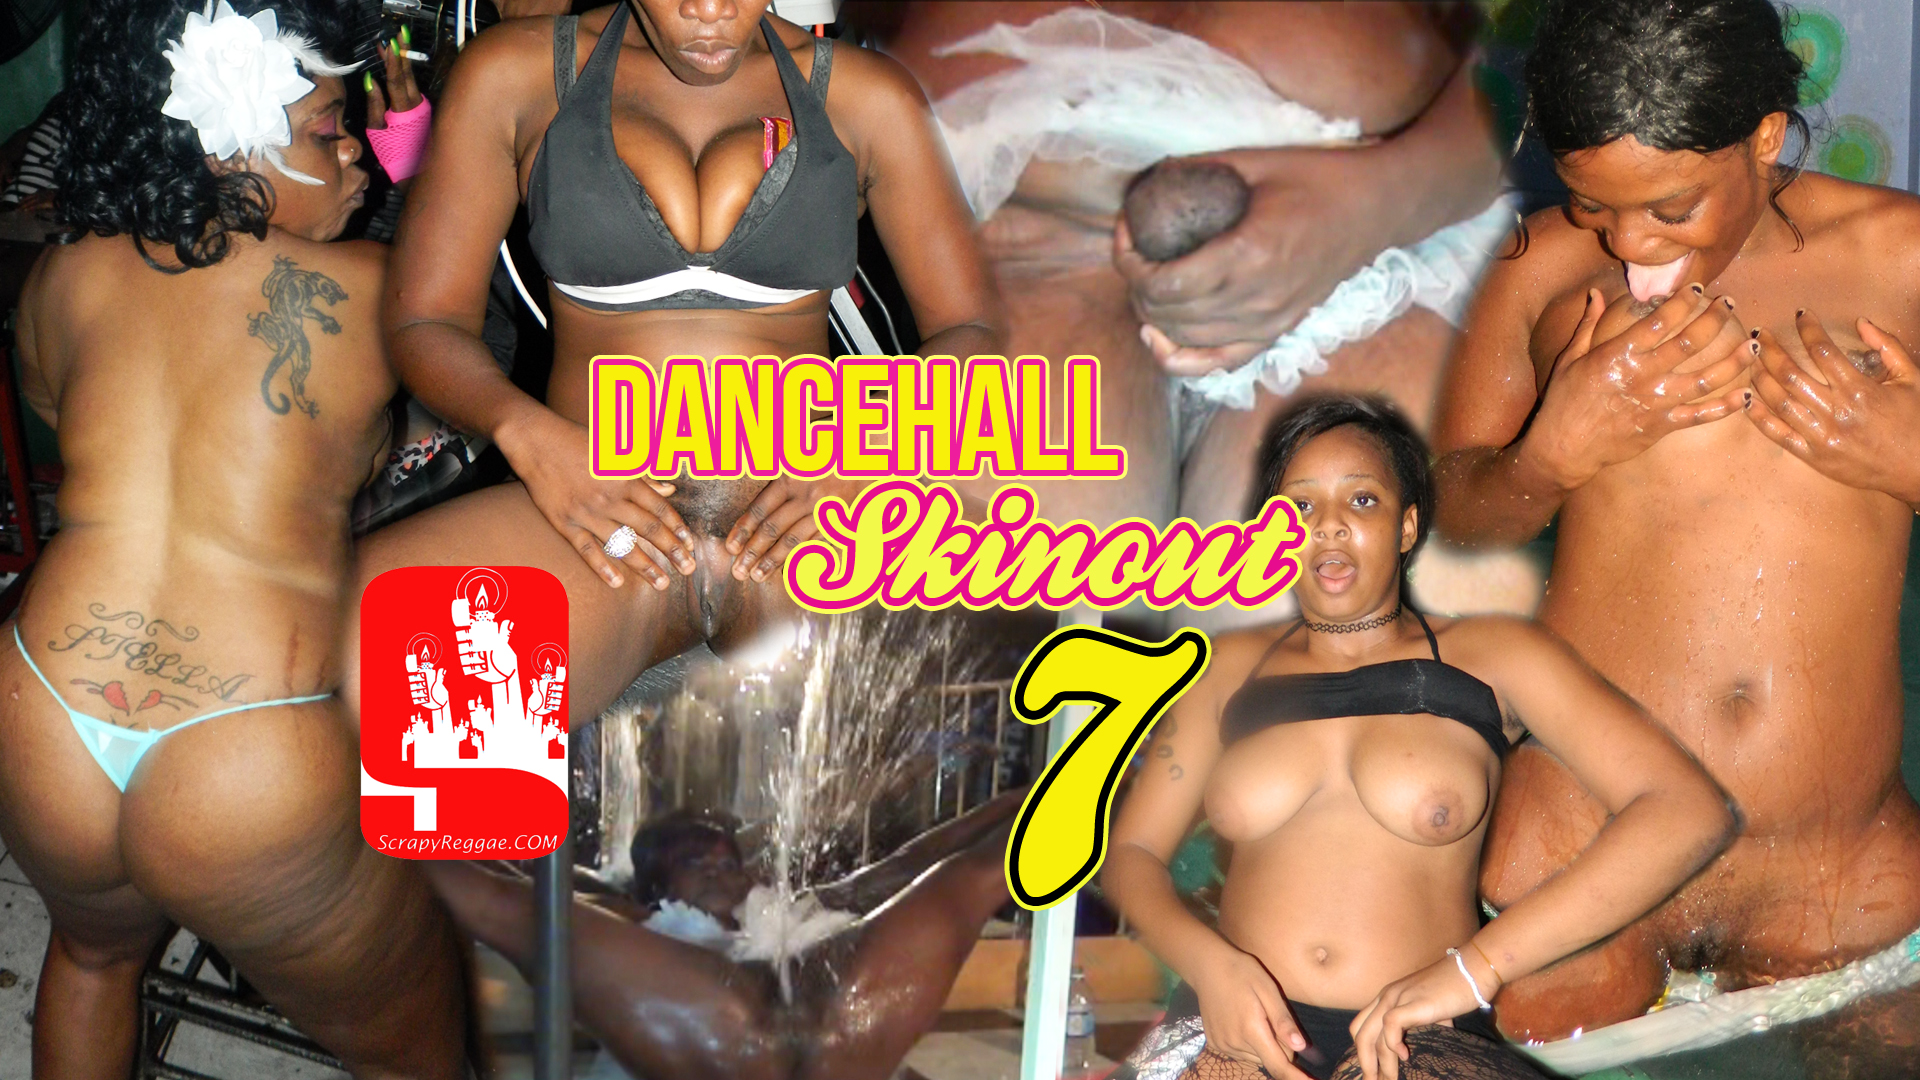 Jamaica skinout dancehall